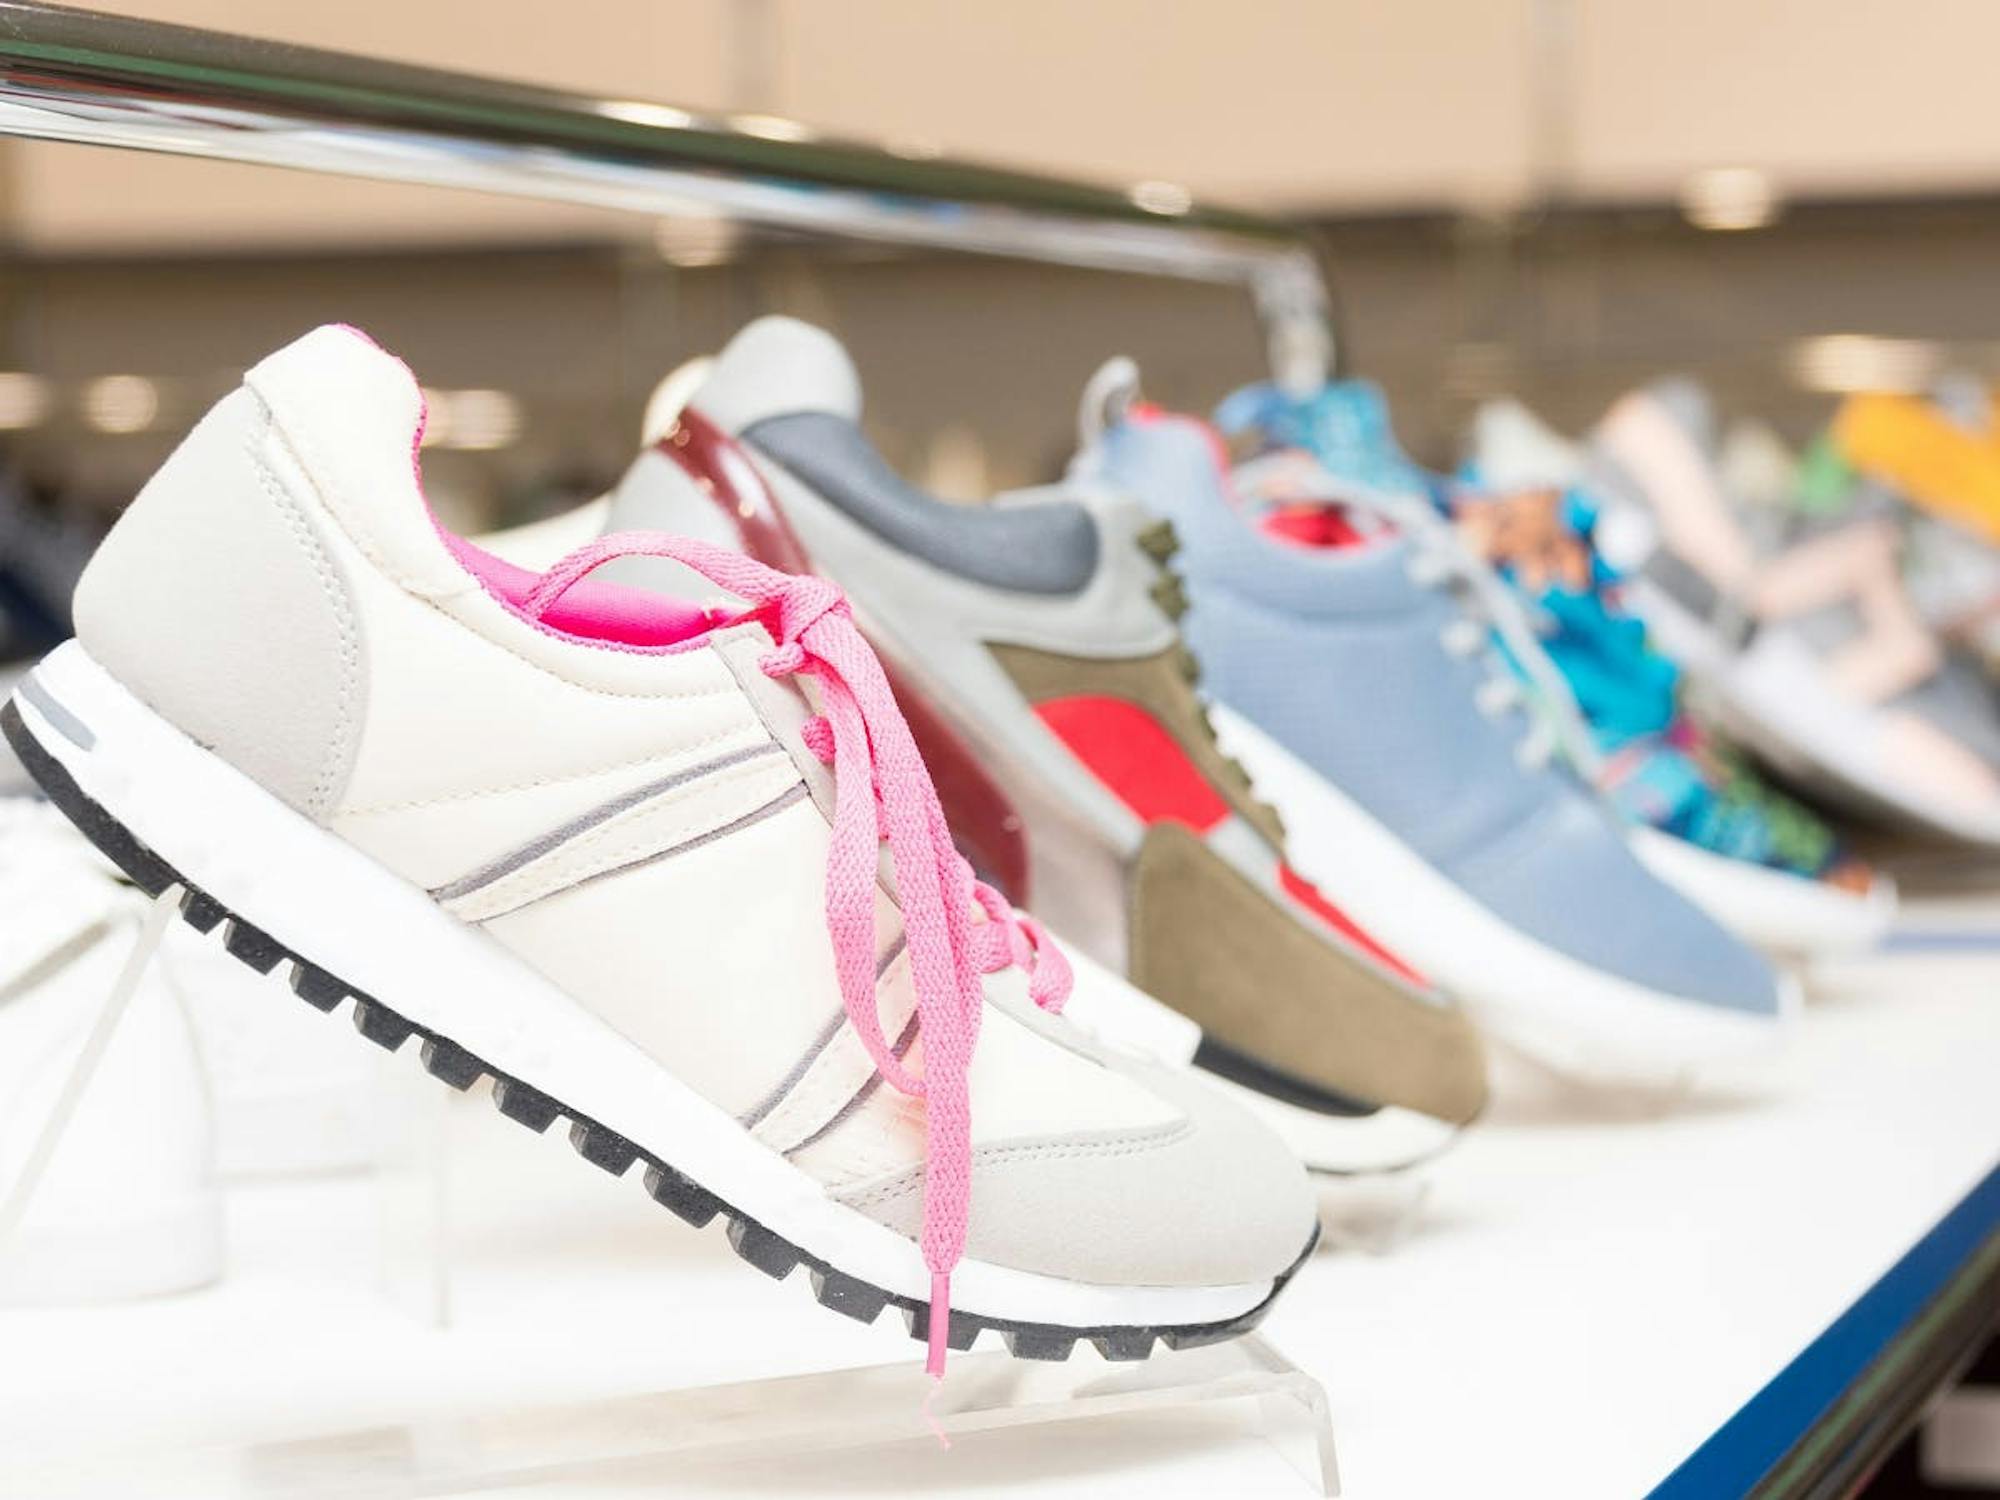 Skechers: international shipping for stylish footwear